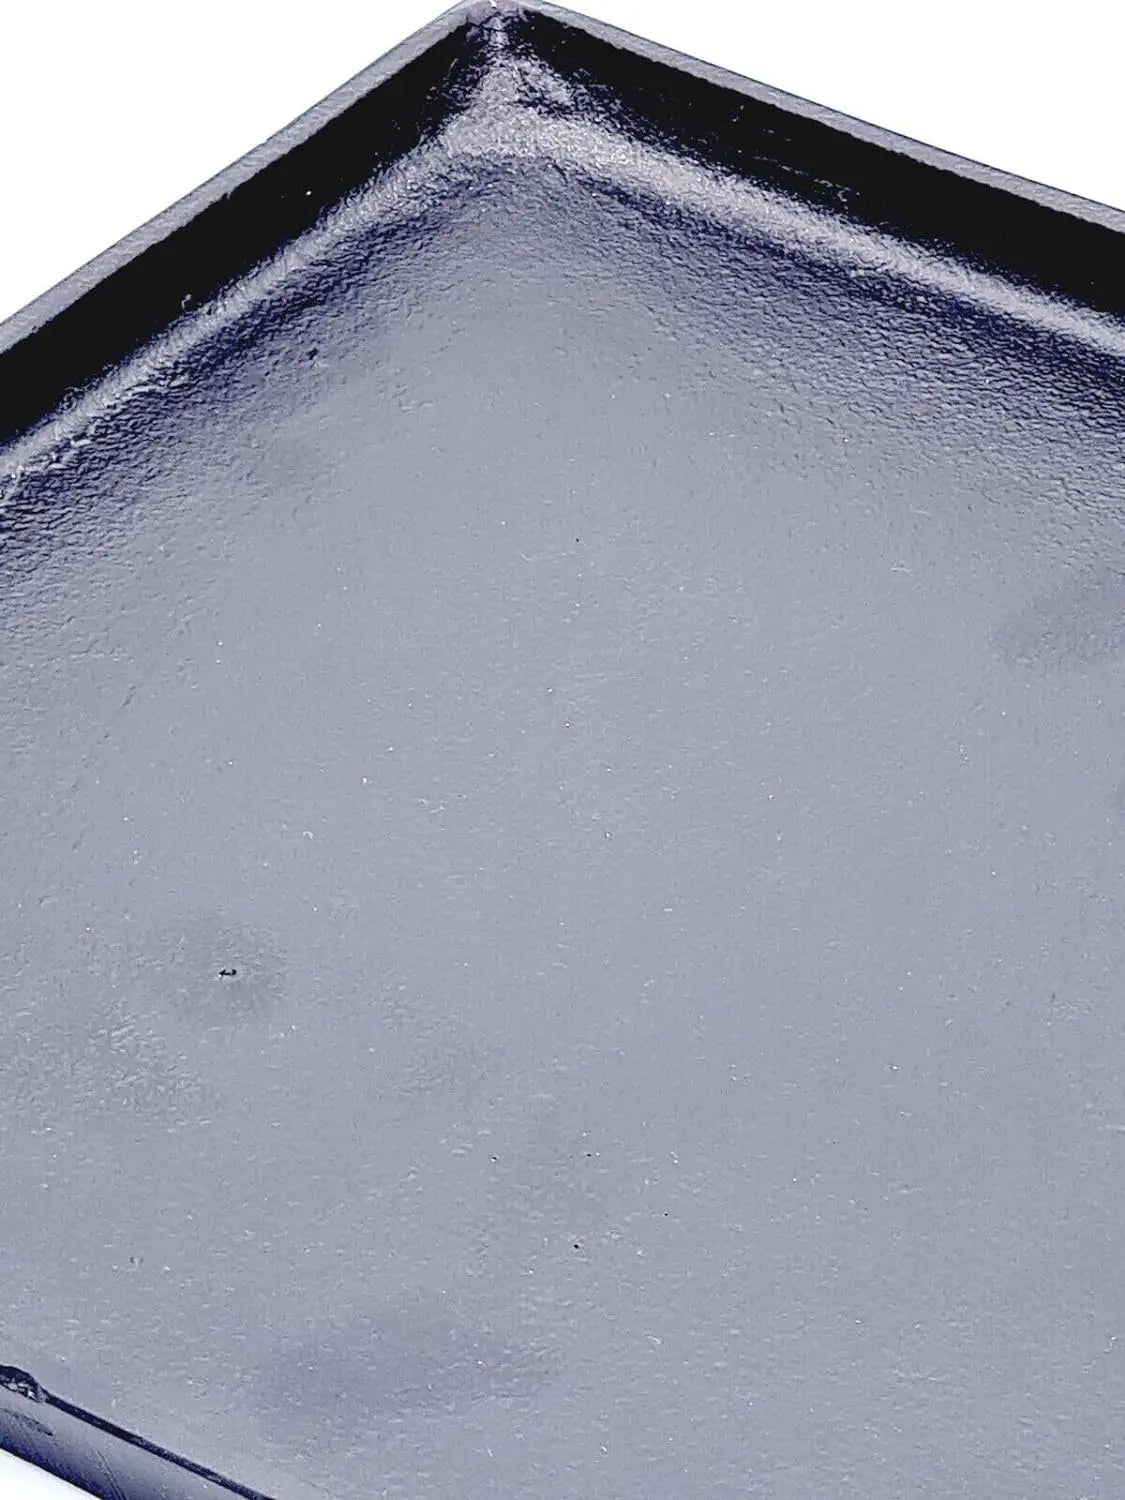 Dekoteller schwarz Dekoschale Metall Teller Schale Alu Deko 25x25 cm